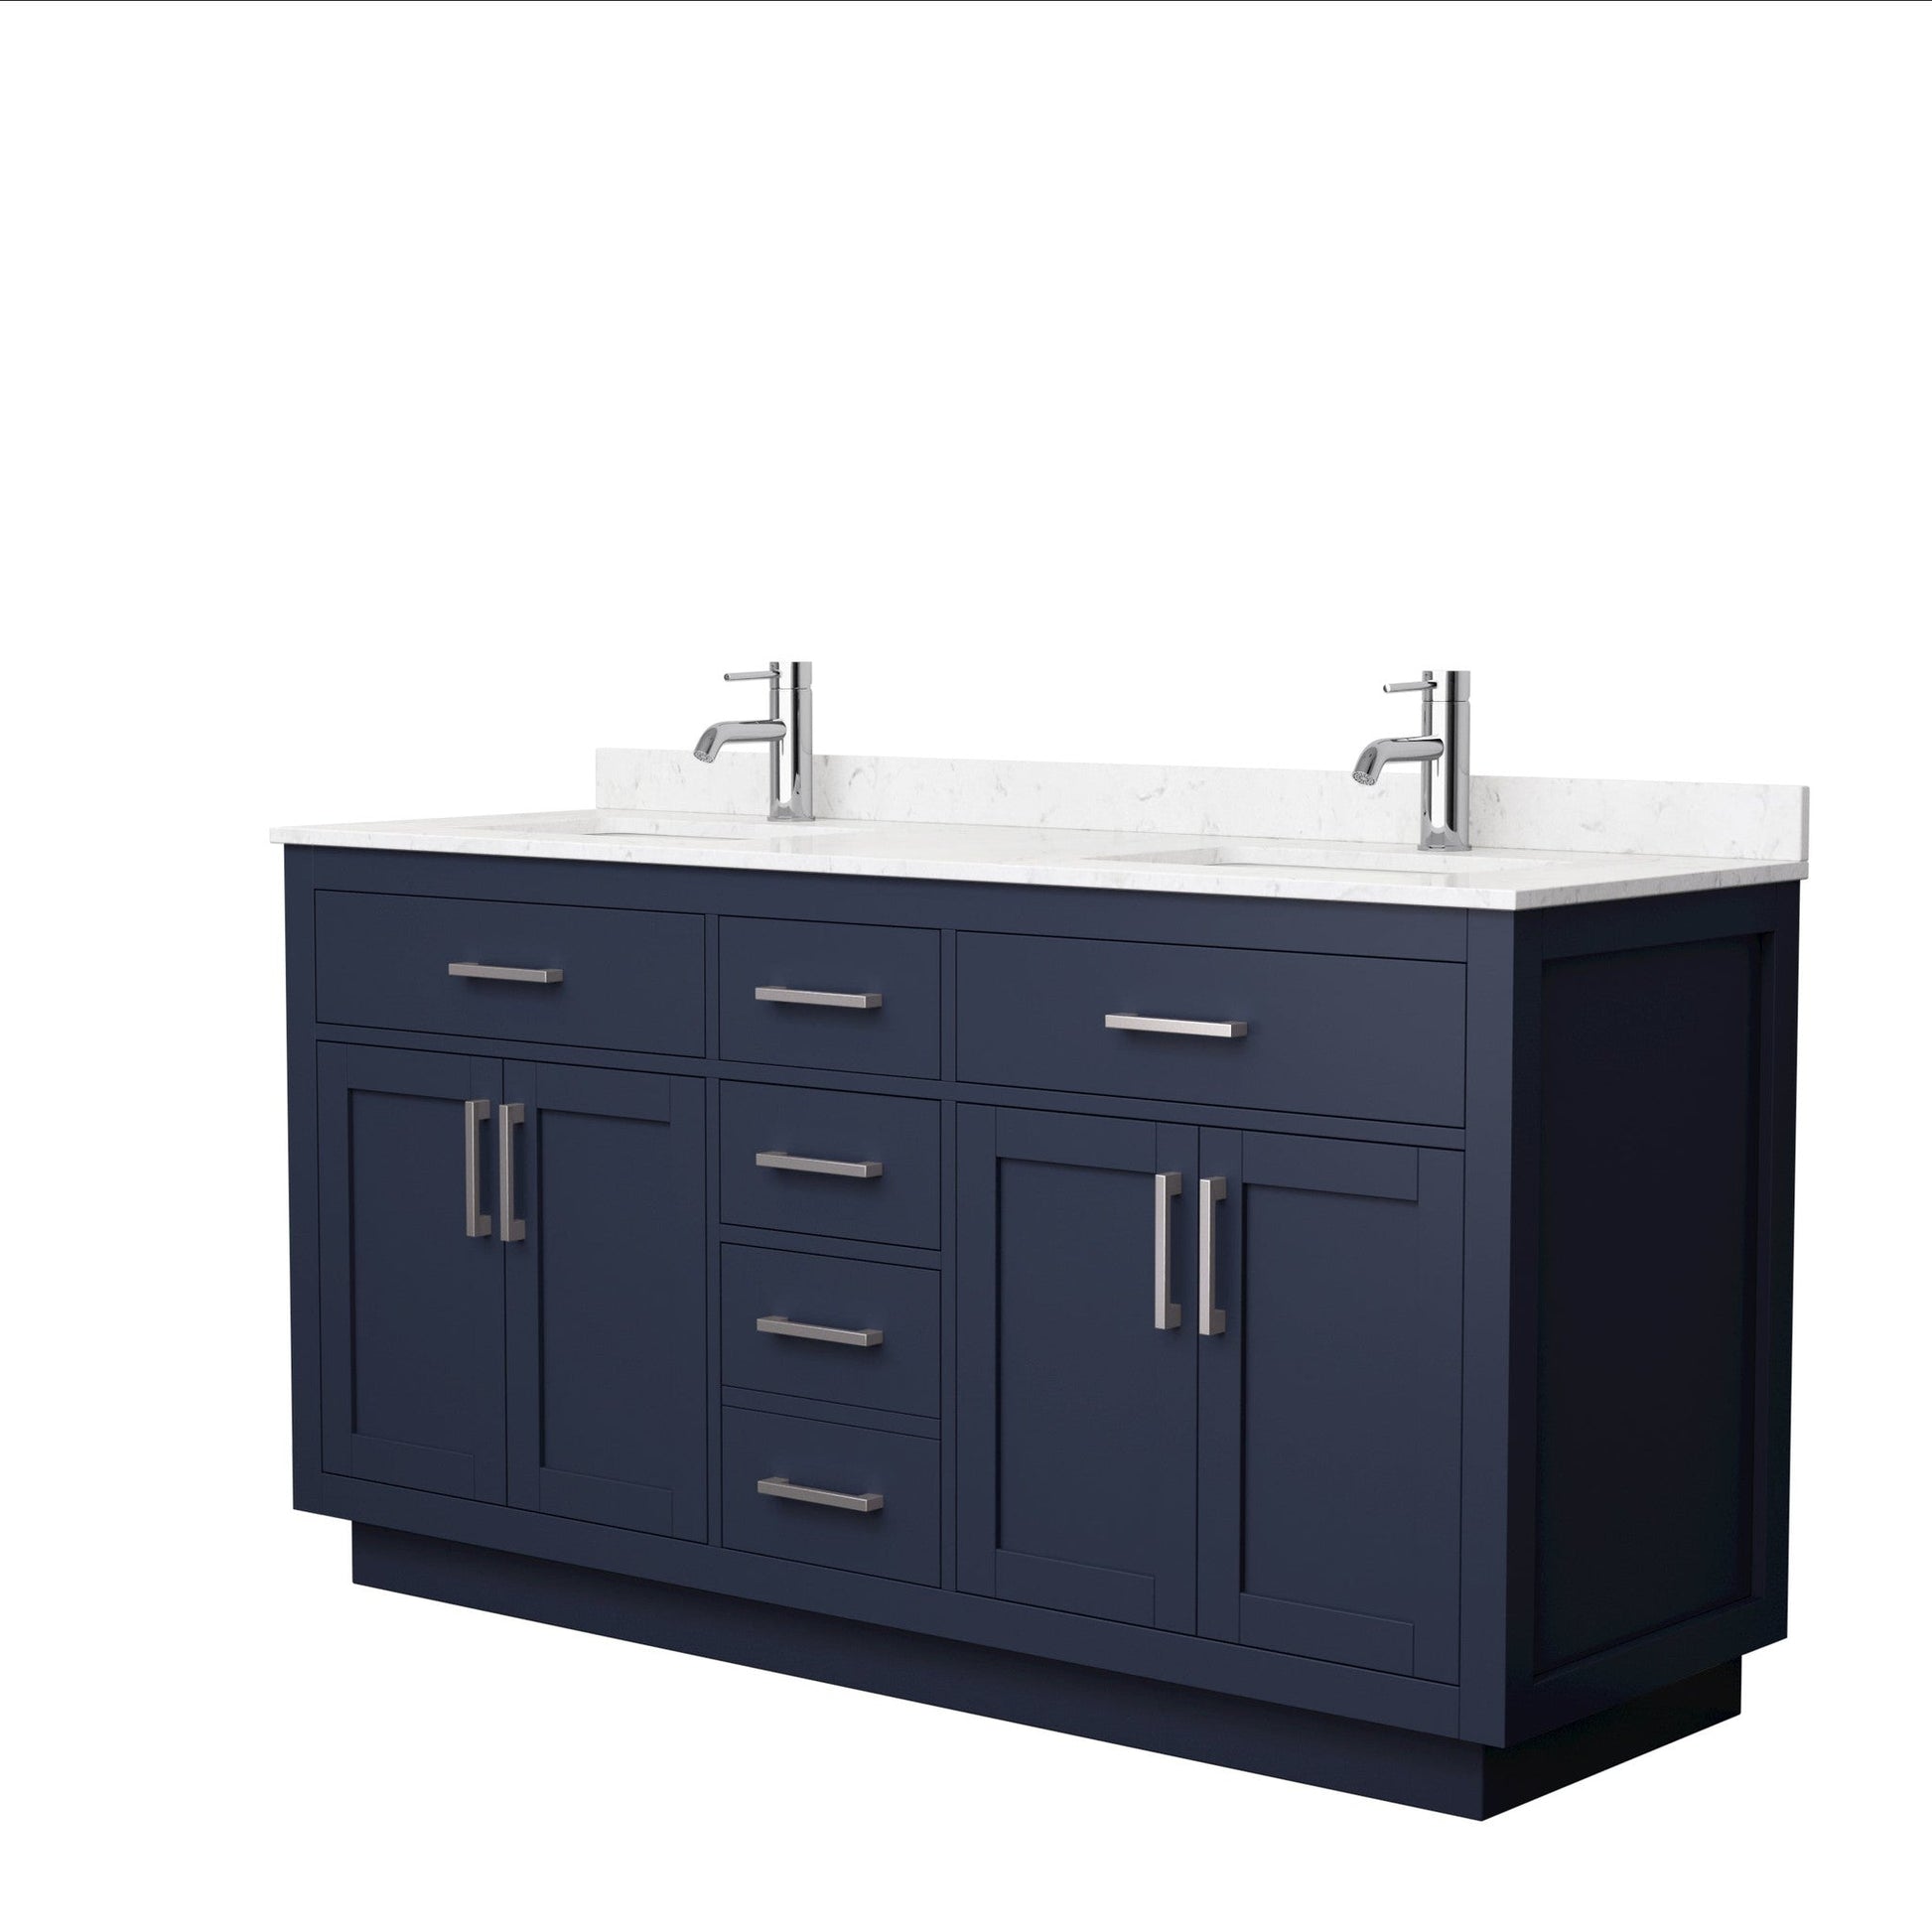 Beckett 66" Double Bathroom Vanity With Toe Kick in Dark Blue, Carrara Cultured Marble Countertop, Undermount Square Sinks, Brushed Nickel Trim